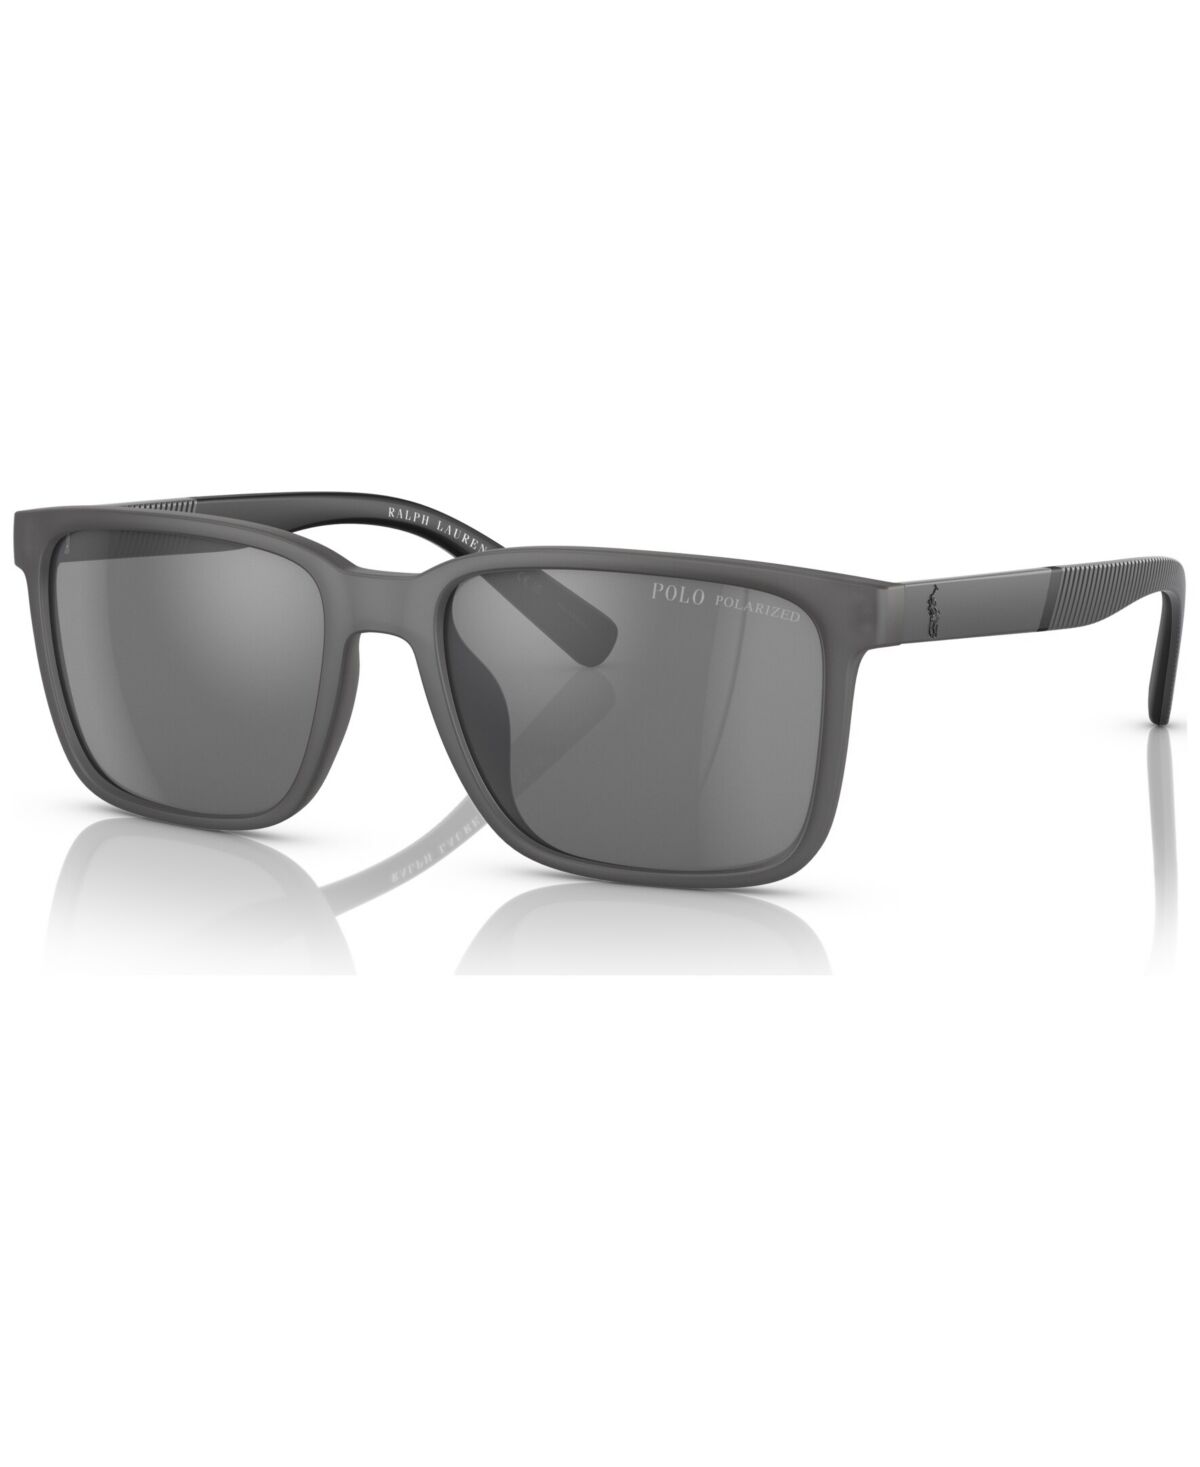 Ralph Lauren Polo Ralph Lauren Men's Polarized Sunglasses, PH4189U55-zp - Matte Transparent Gray